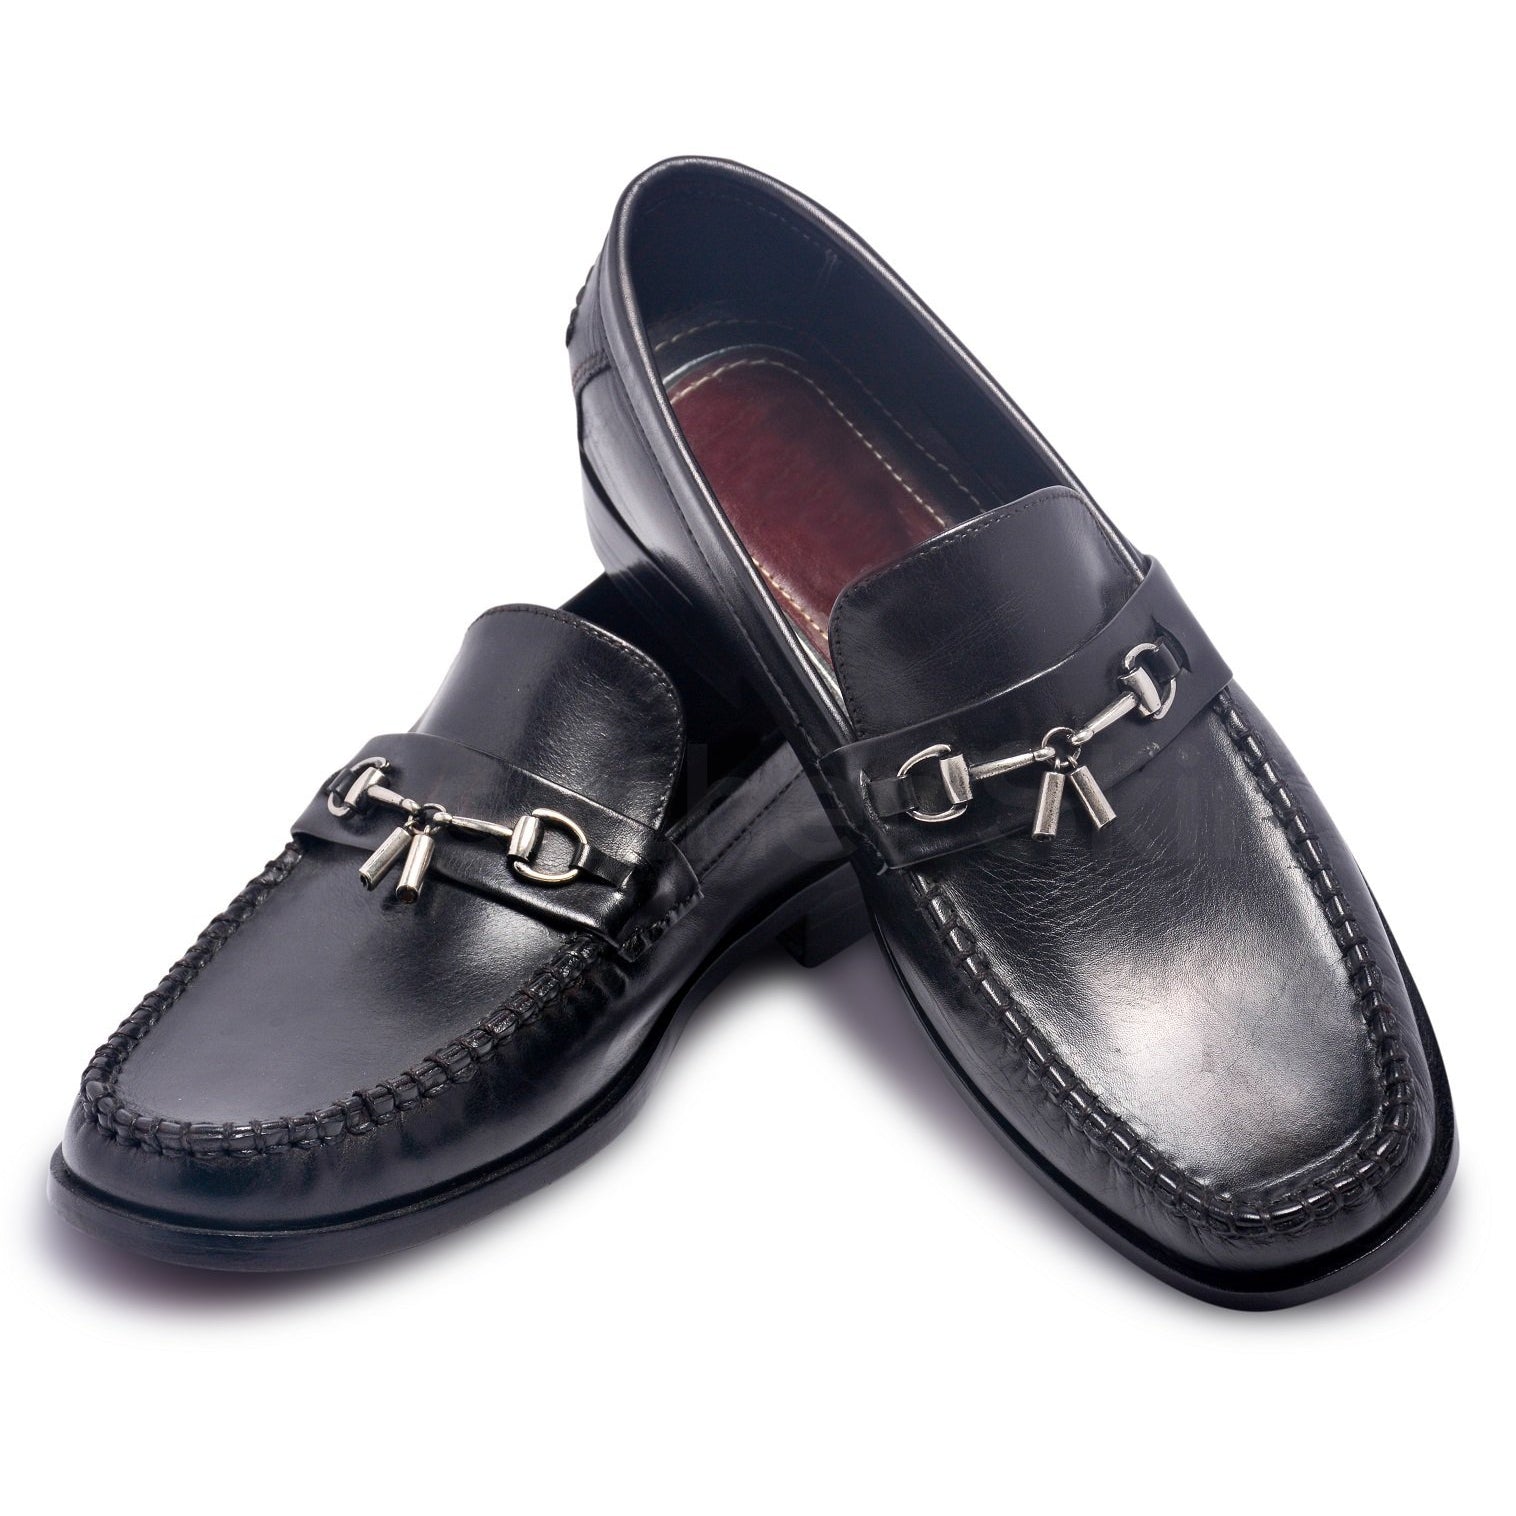 Bit Loafer Slip-On Genuine Shoes with Metal Tassels for - Leather Skin Shop